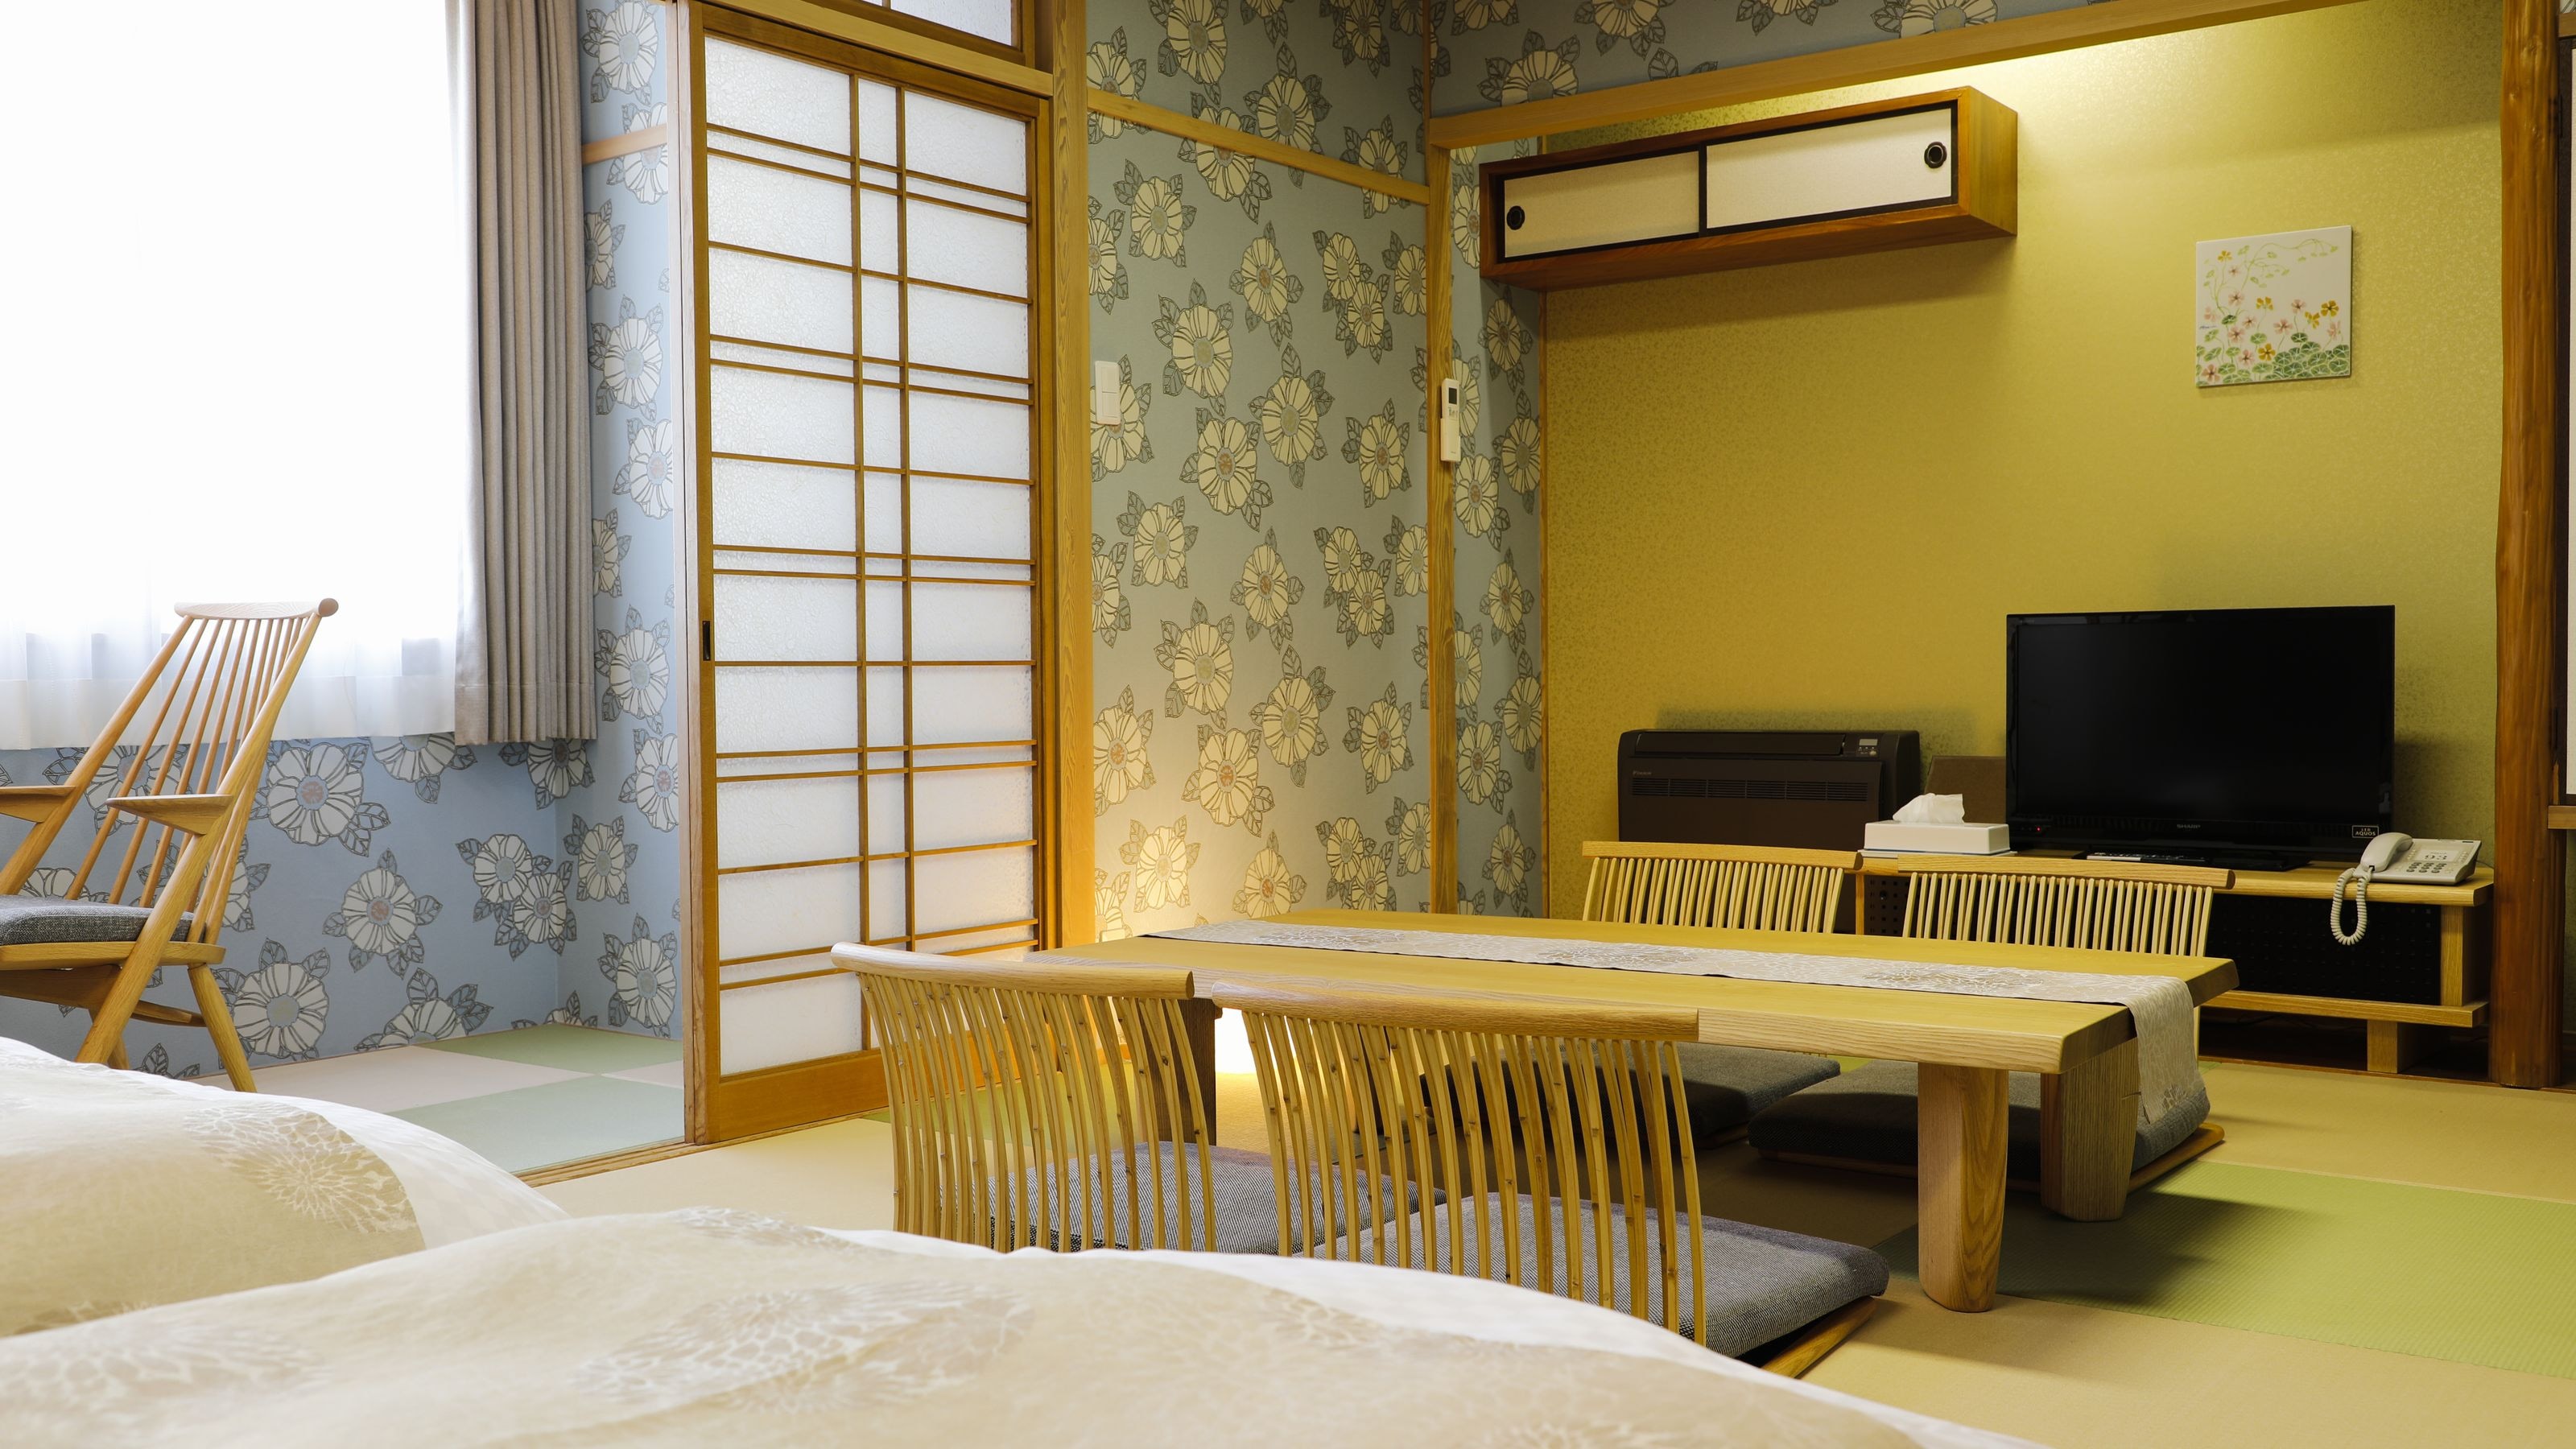 * DX日式房間示例：席夢思床被放置在寬敞的日式房間中